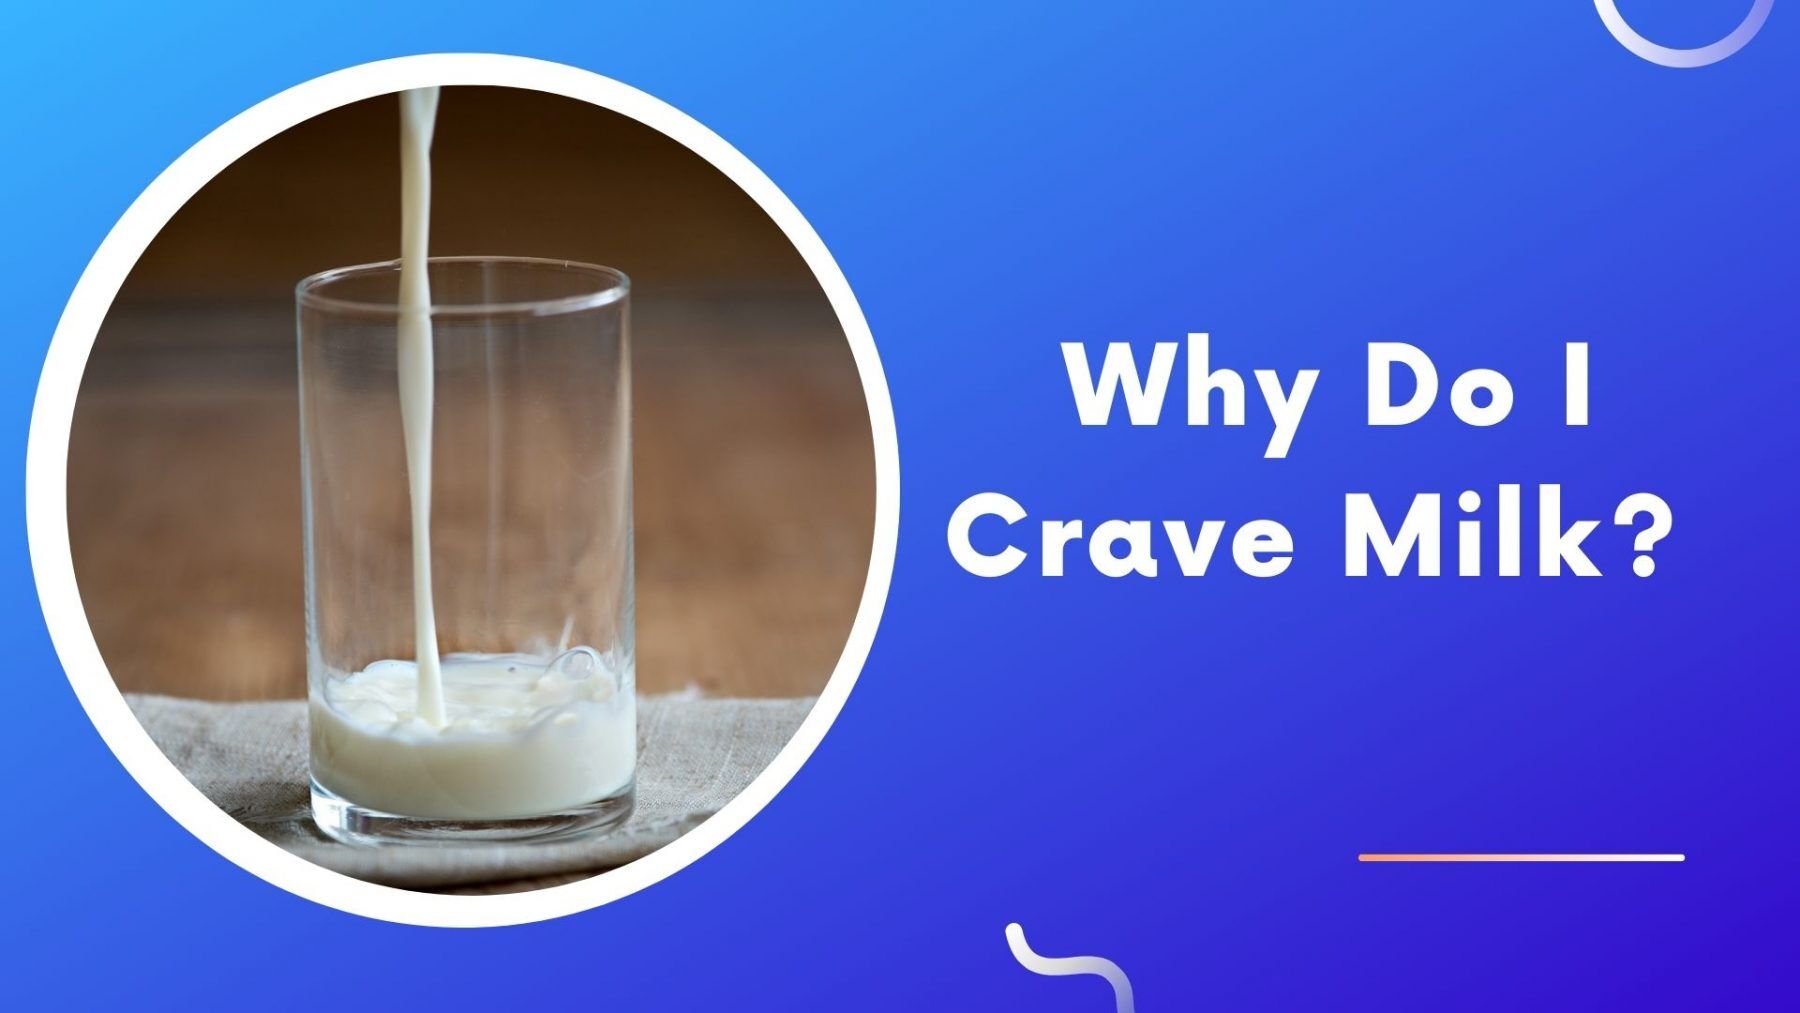 Why Do I Crave Milk